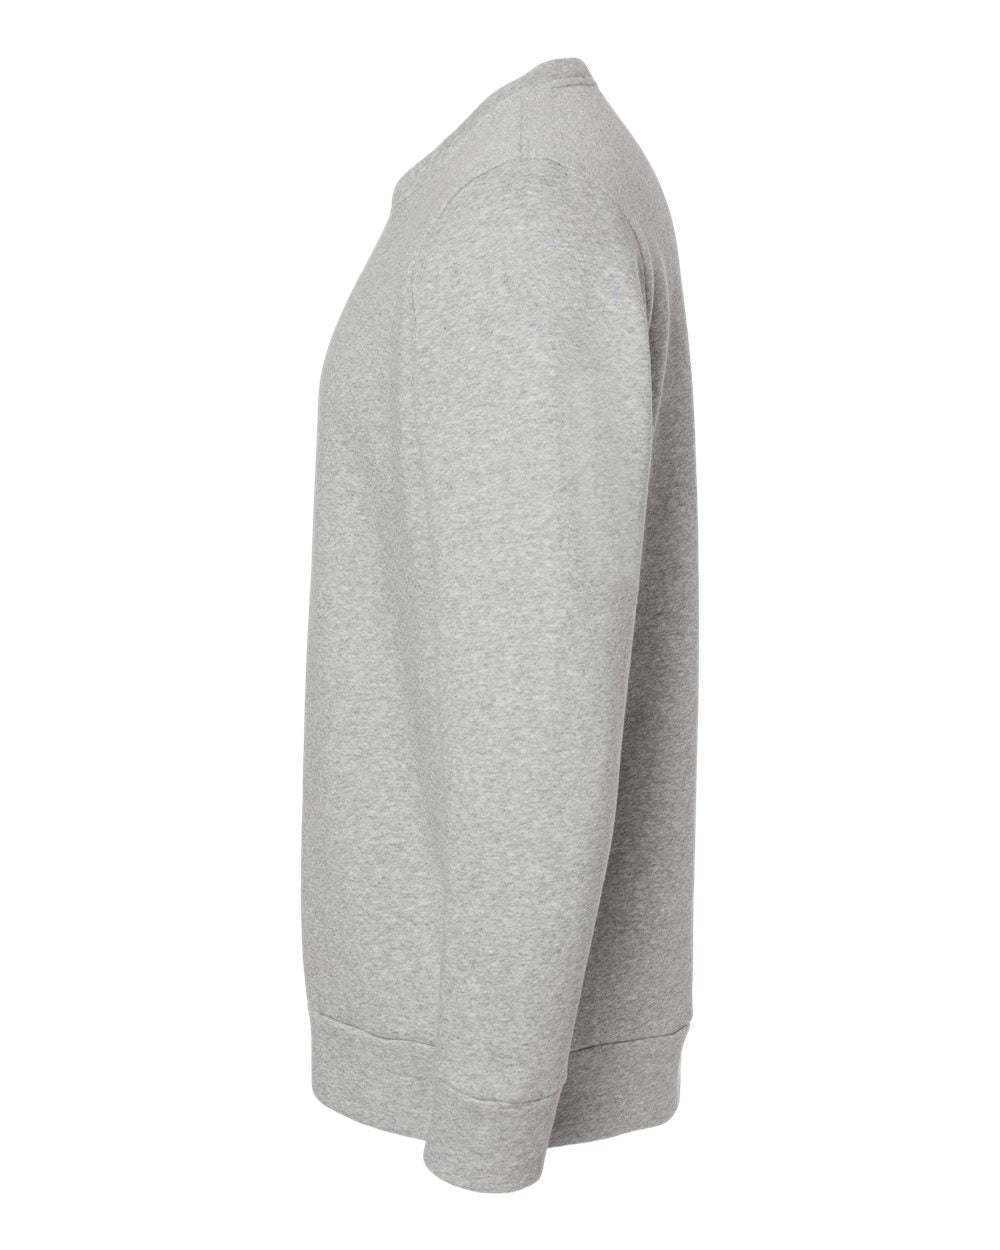 Hardwood - Adidas - Fleece Crewneck Sweatshirt - Grey - IMS Apparel A434Grey-S